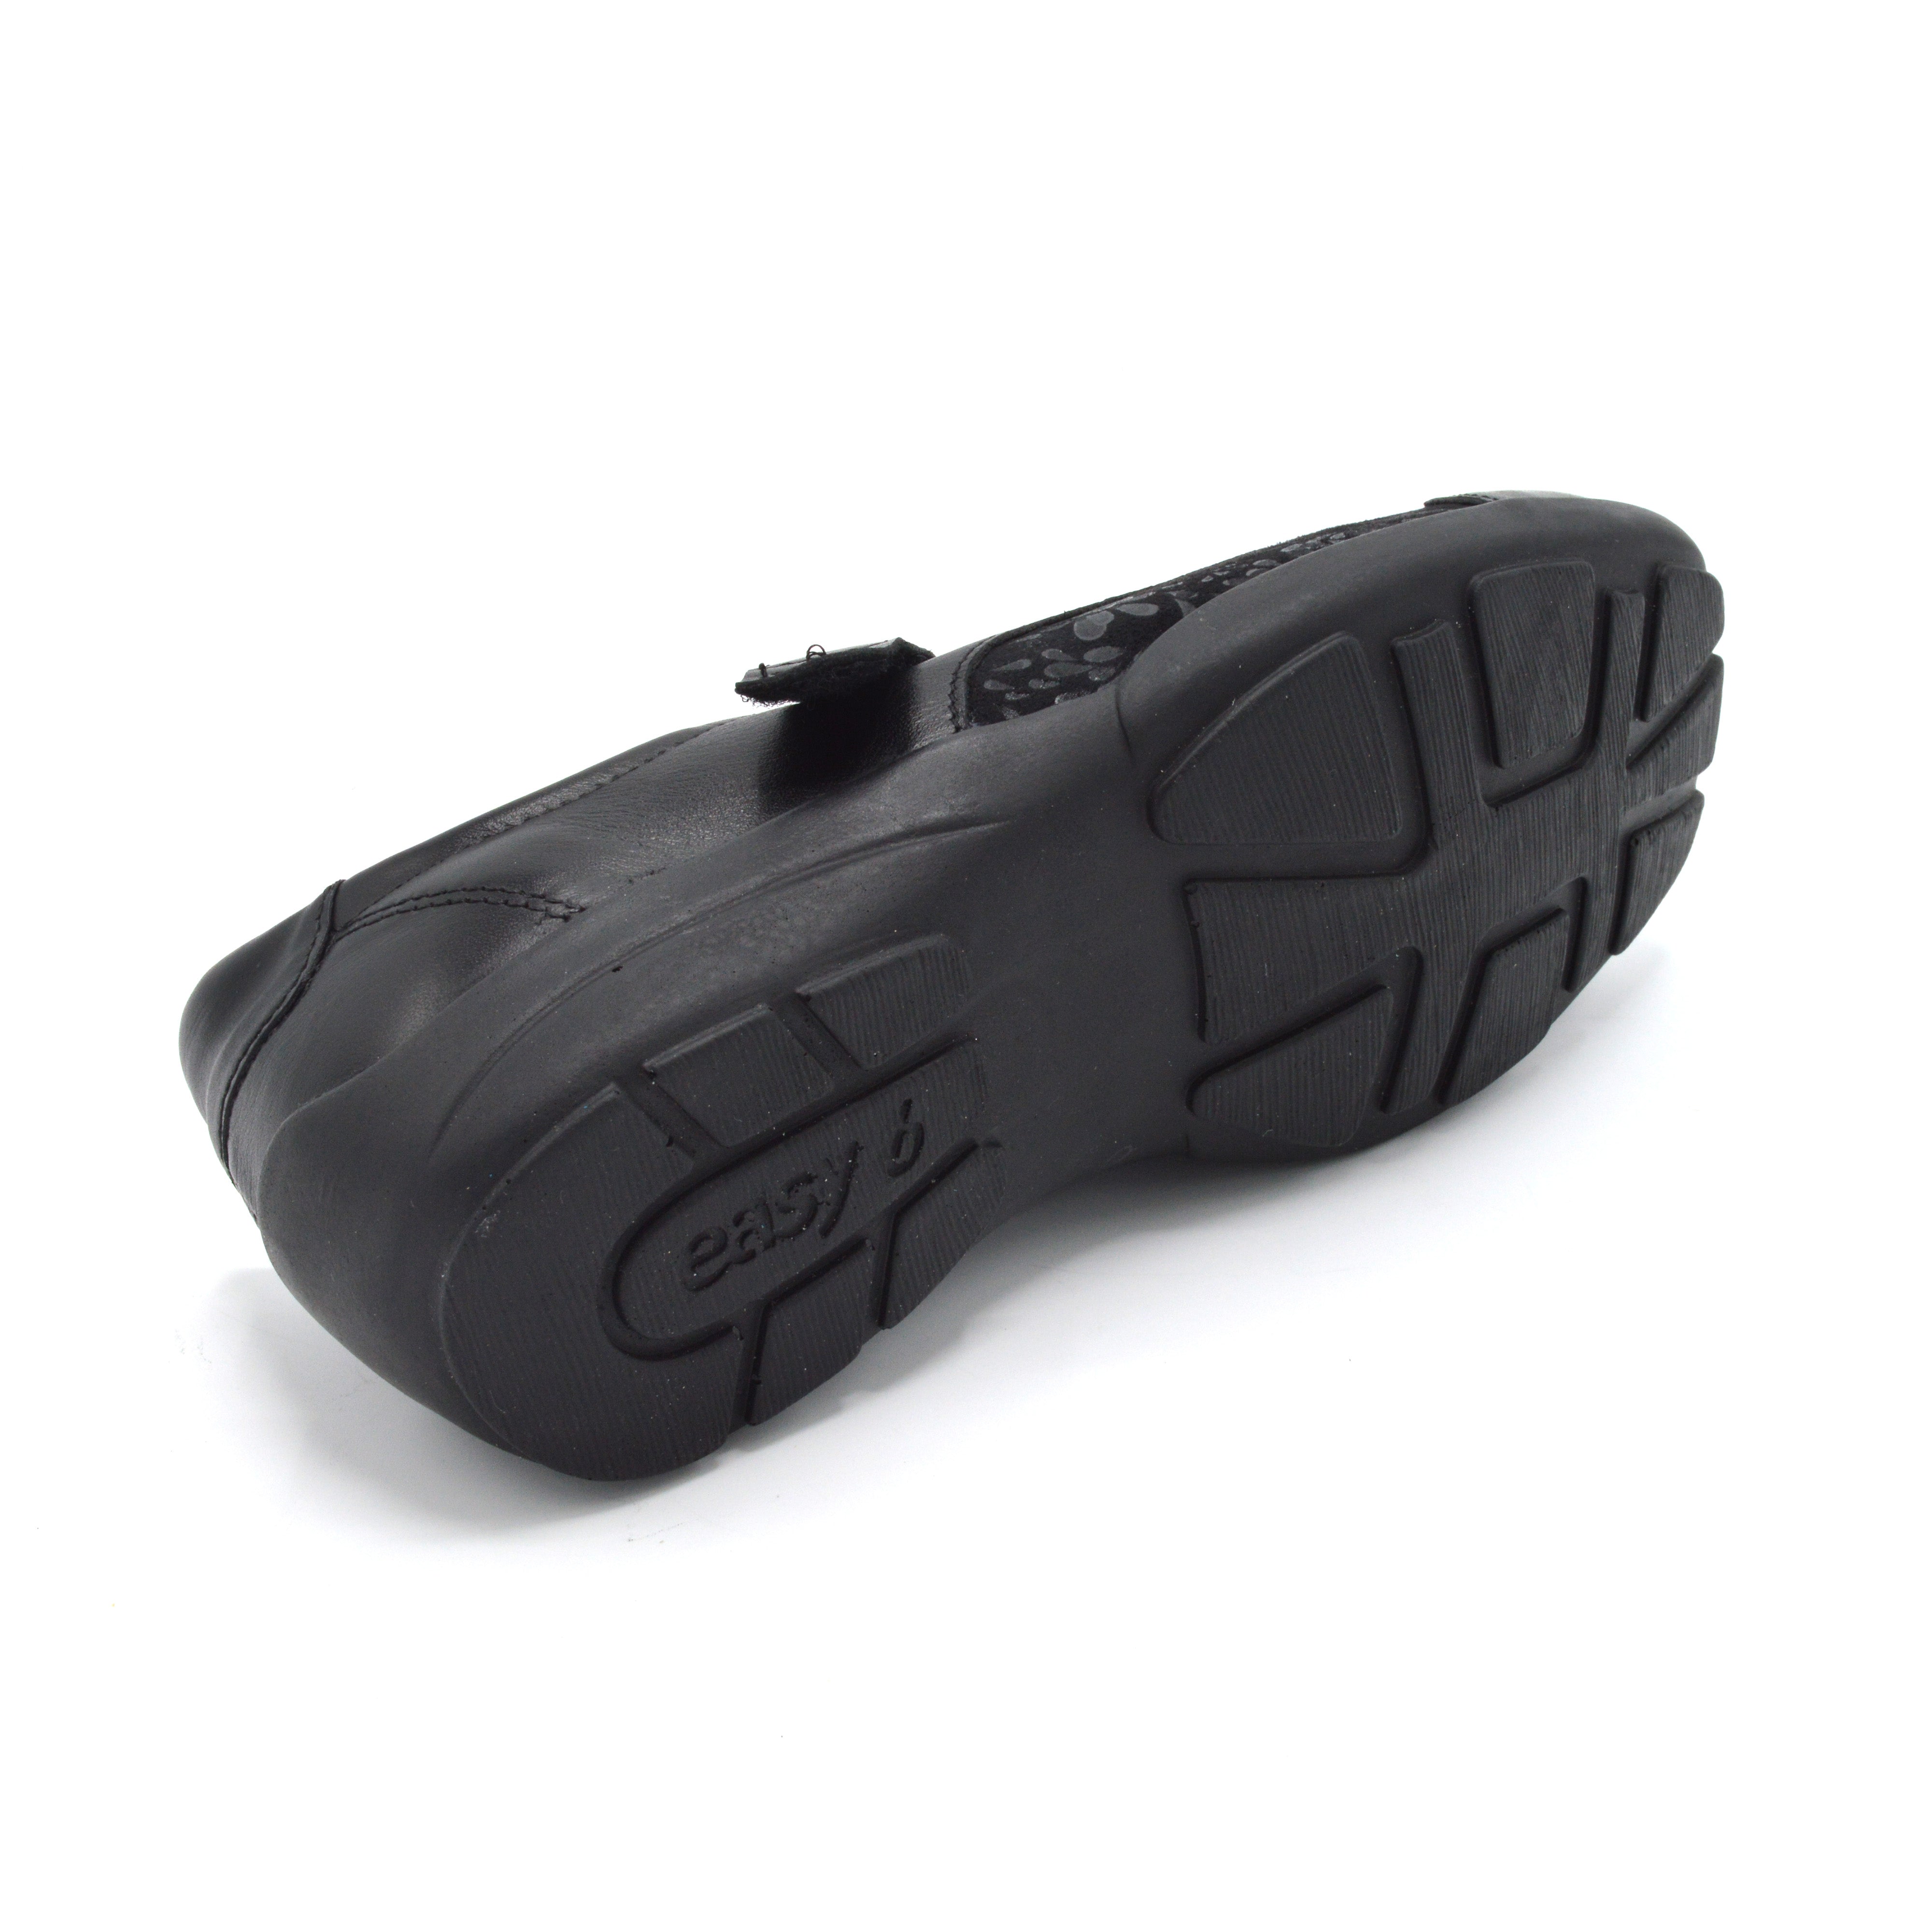 DB Winnipeg- Ladies Extra Wide Velcro Close Shoe - 6V (6E-8E) Fitting - Black